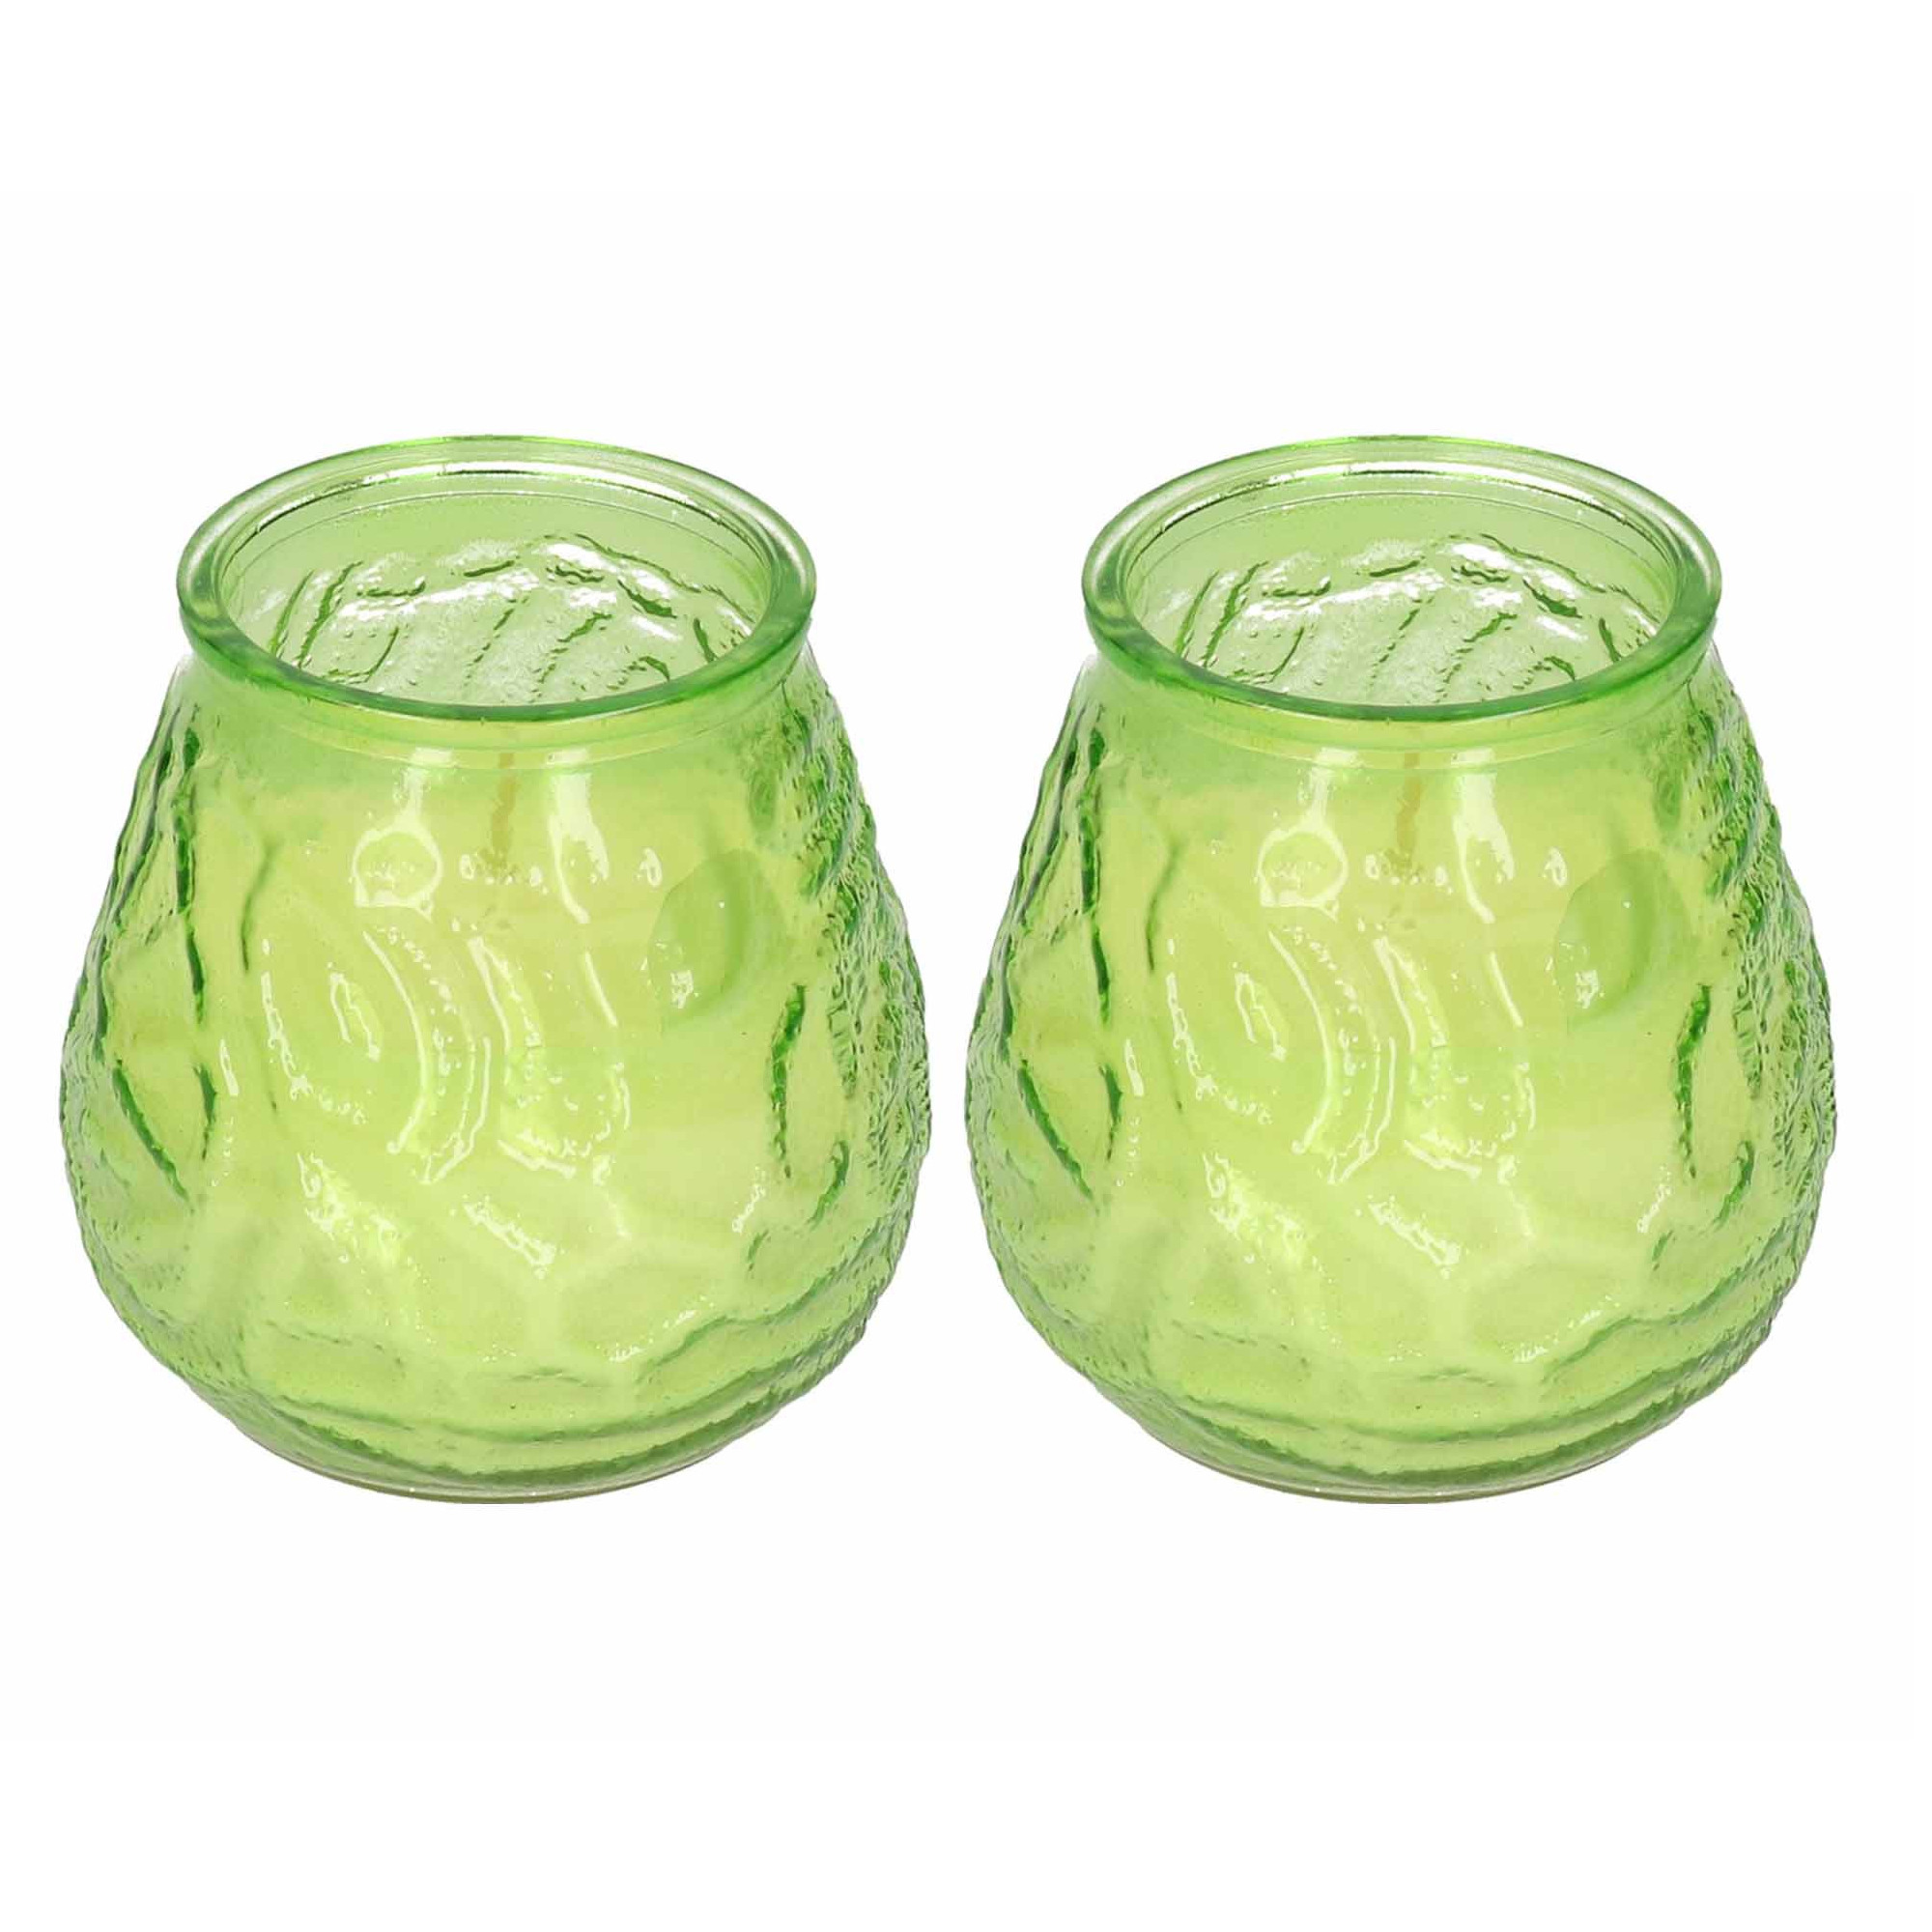 Windlicht geurkaars - 2x - groen glas - 48 branduren - citrusgeur